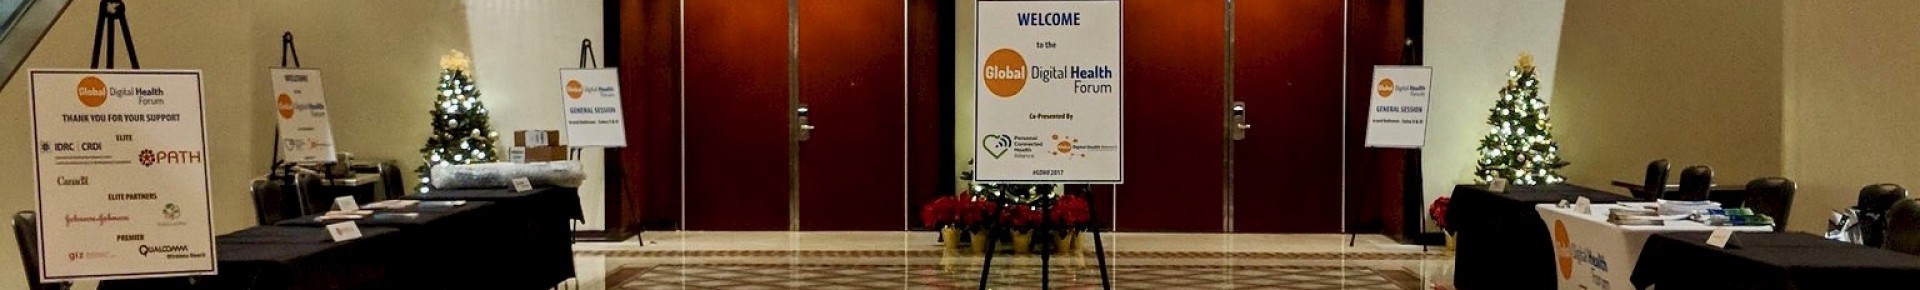 Digital health and UHC – together towards SDG 3!